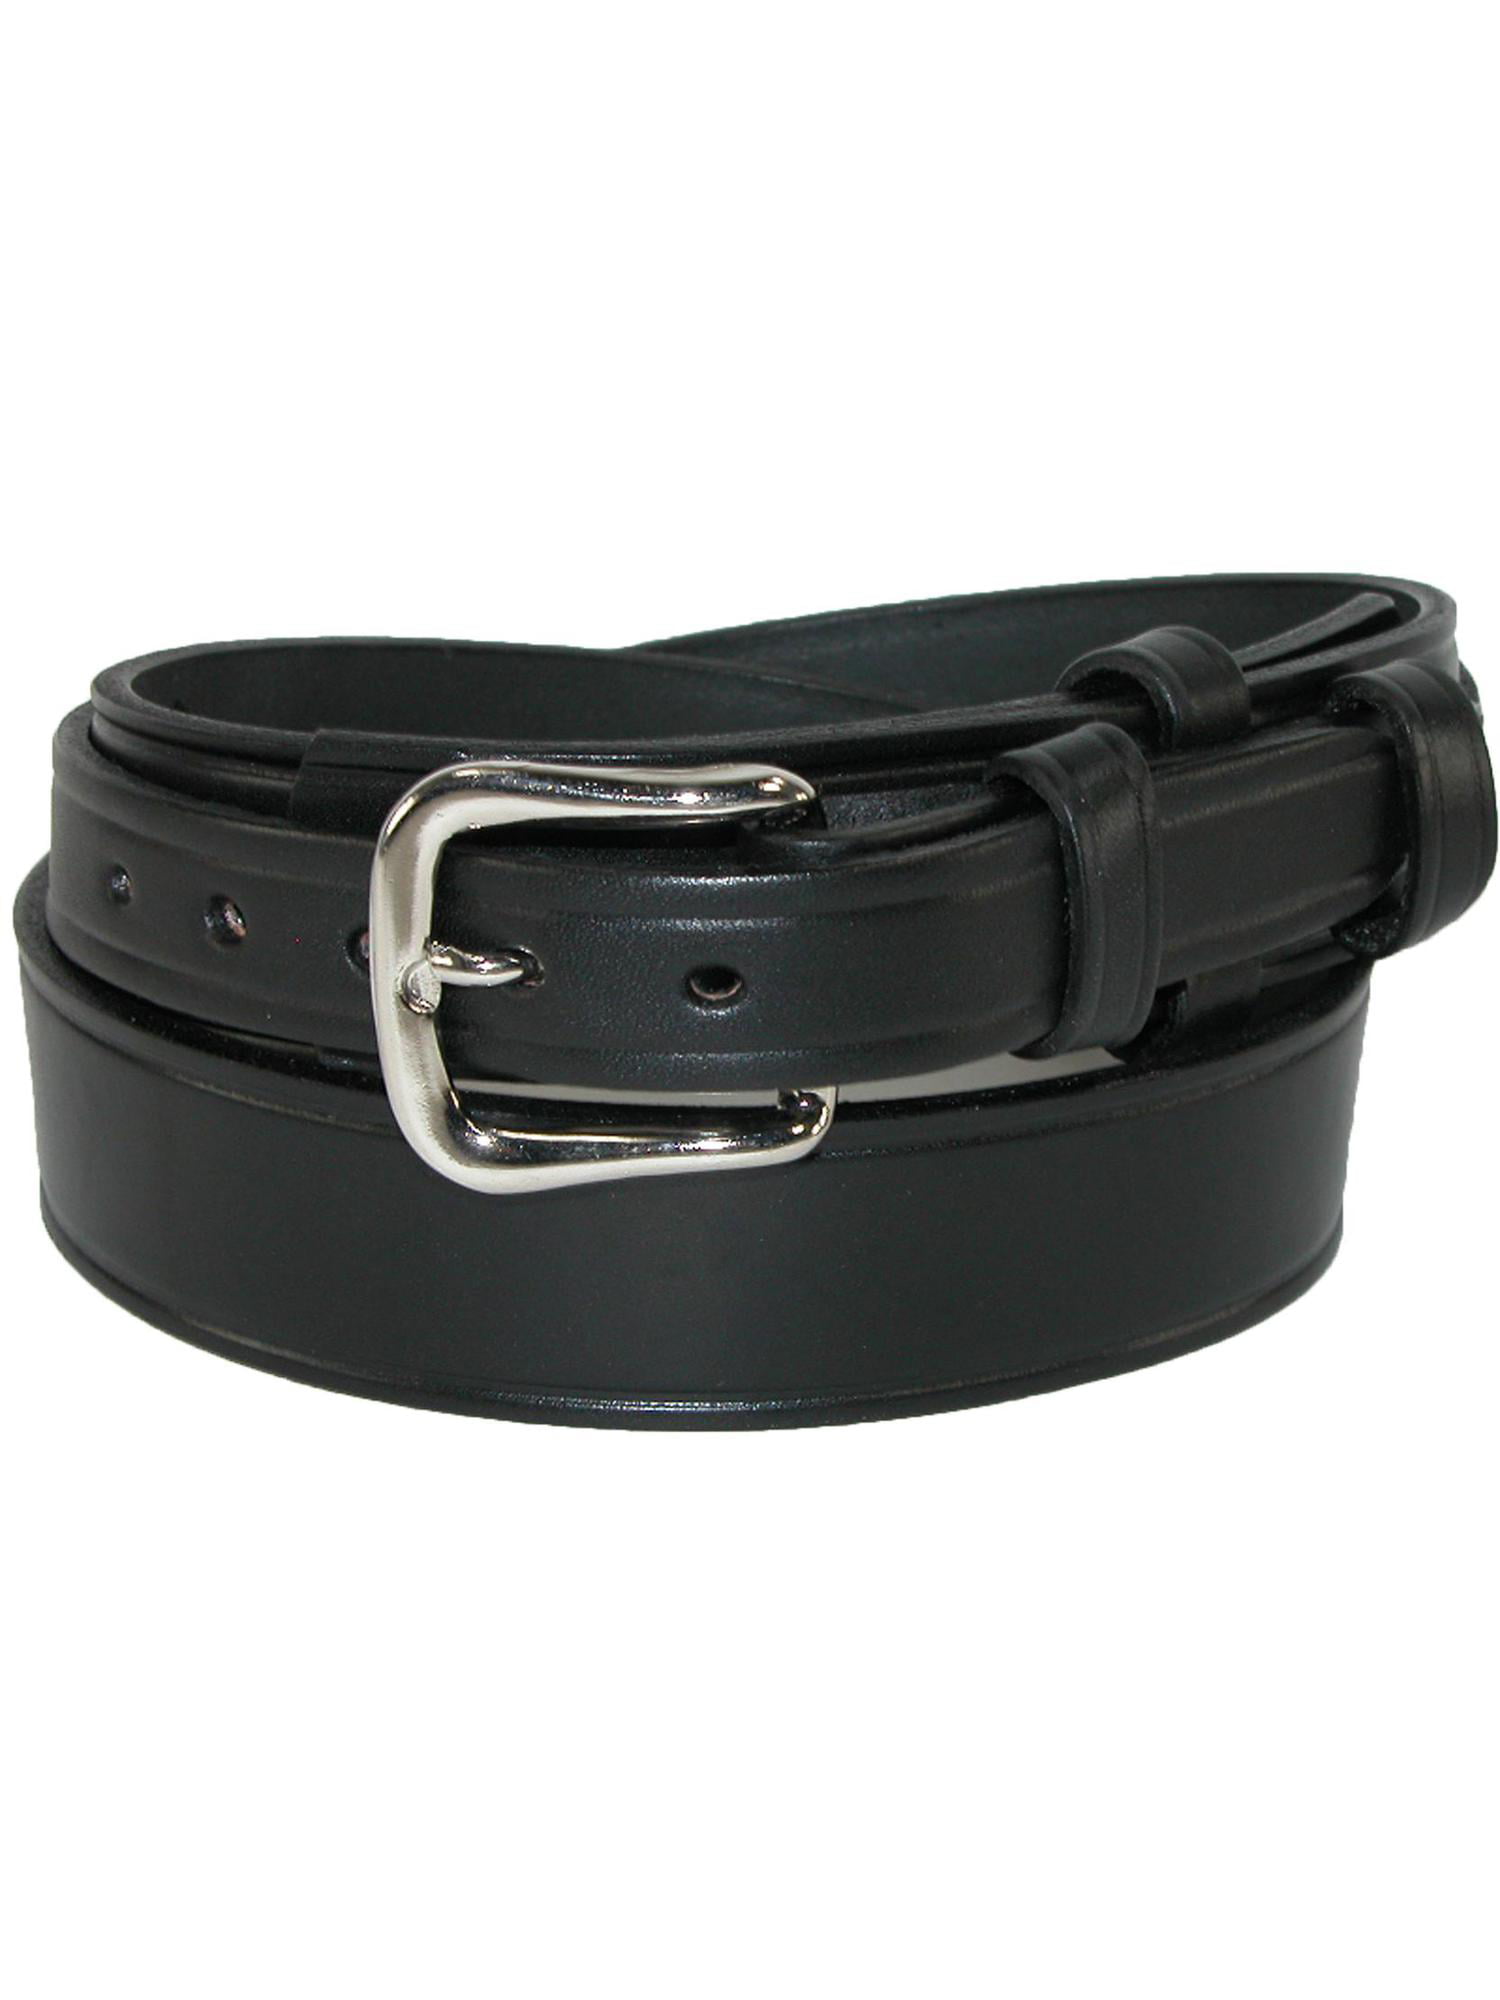 Black Color Excellent Mens 1 pc Full Leather Casual Jean Belt 1-1/2 wide